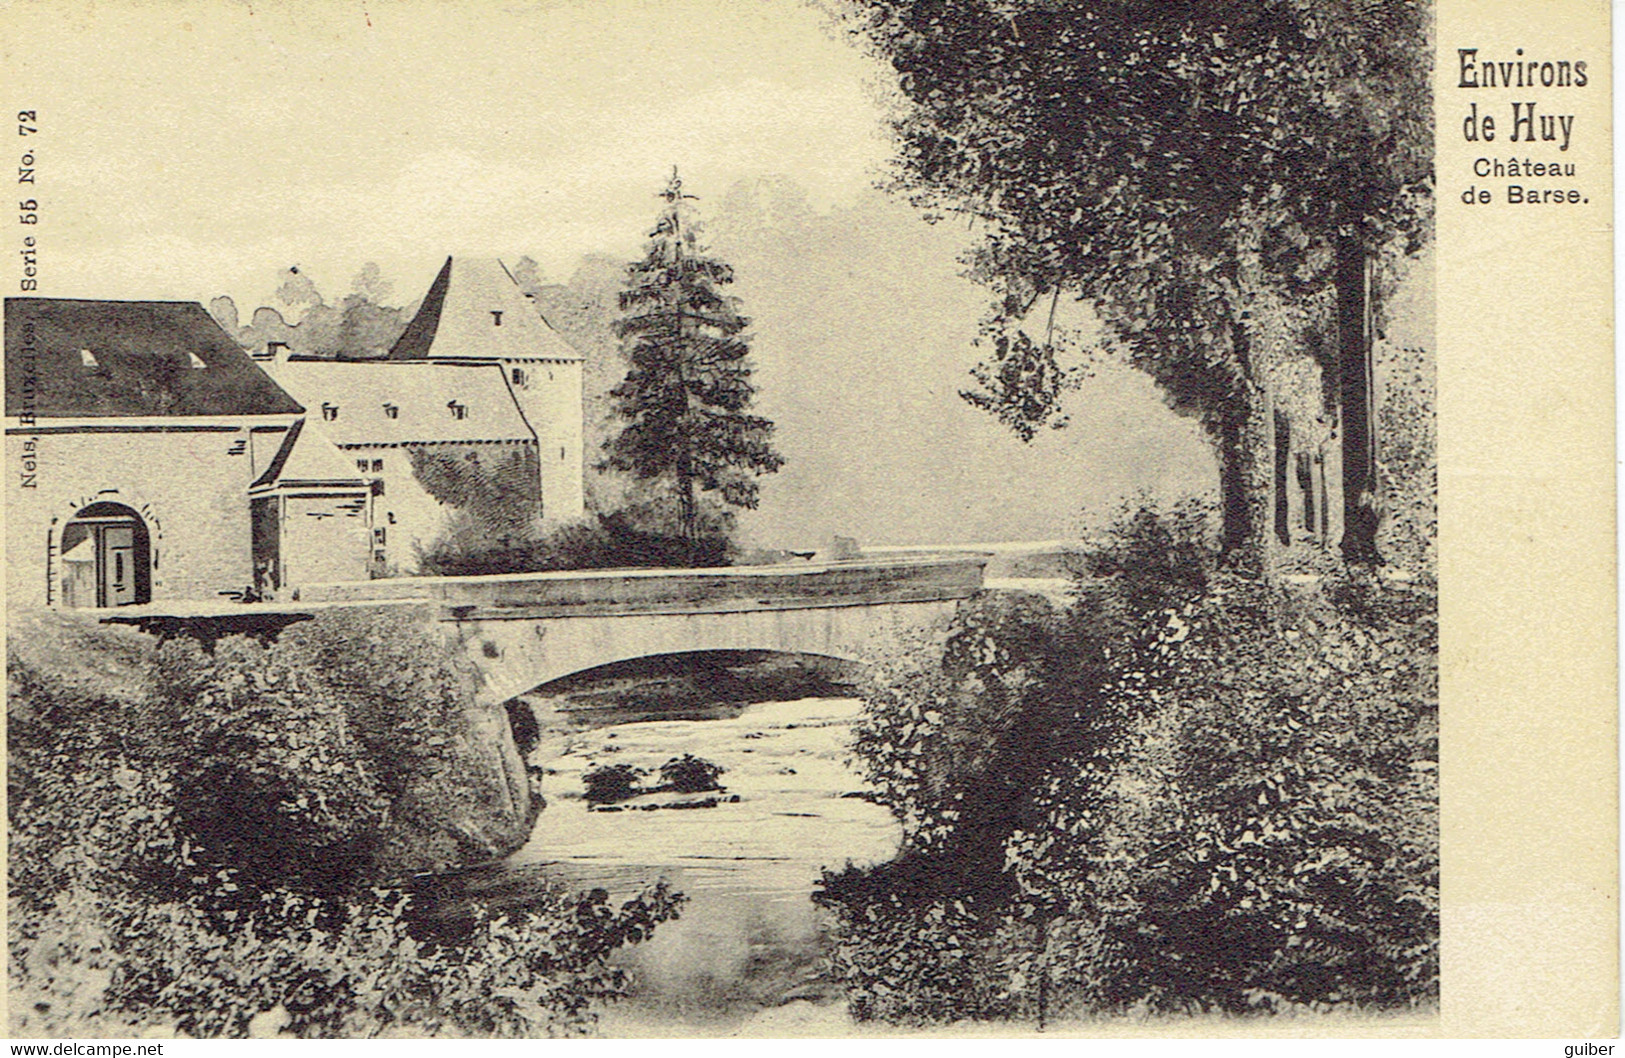 Environs De Huy Chateau De Barse - Huy